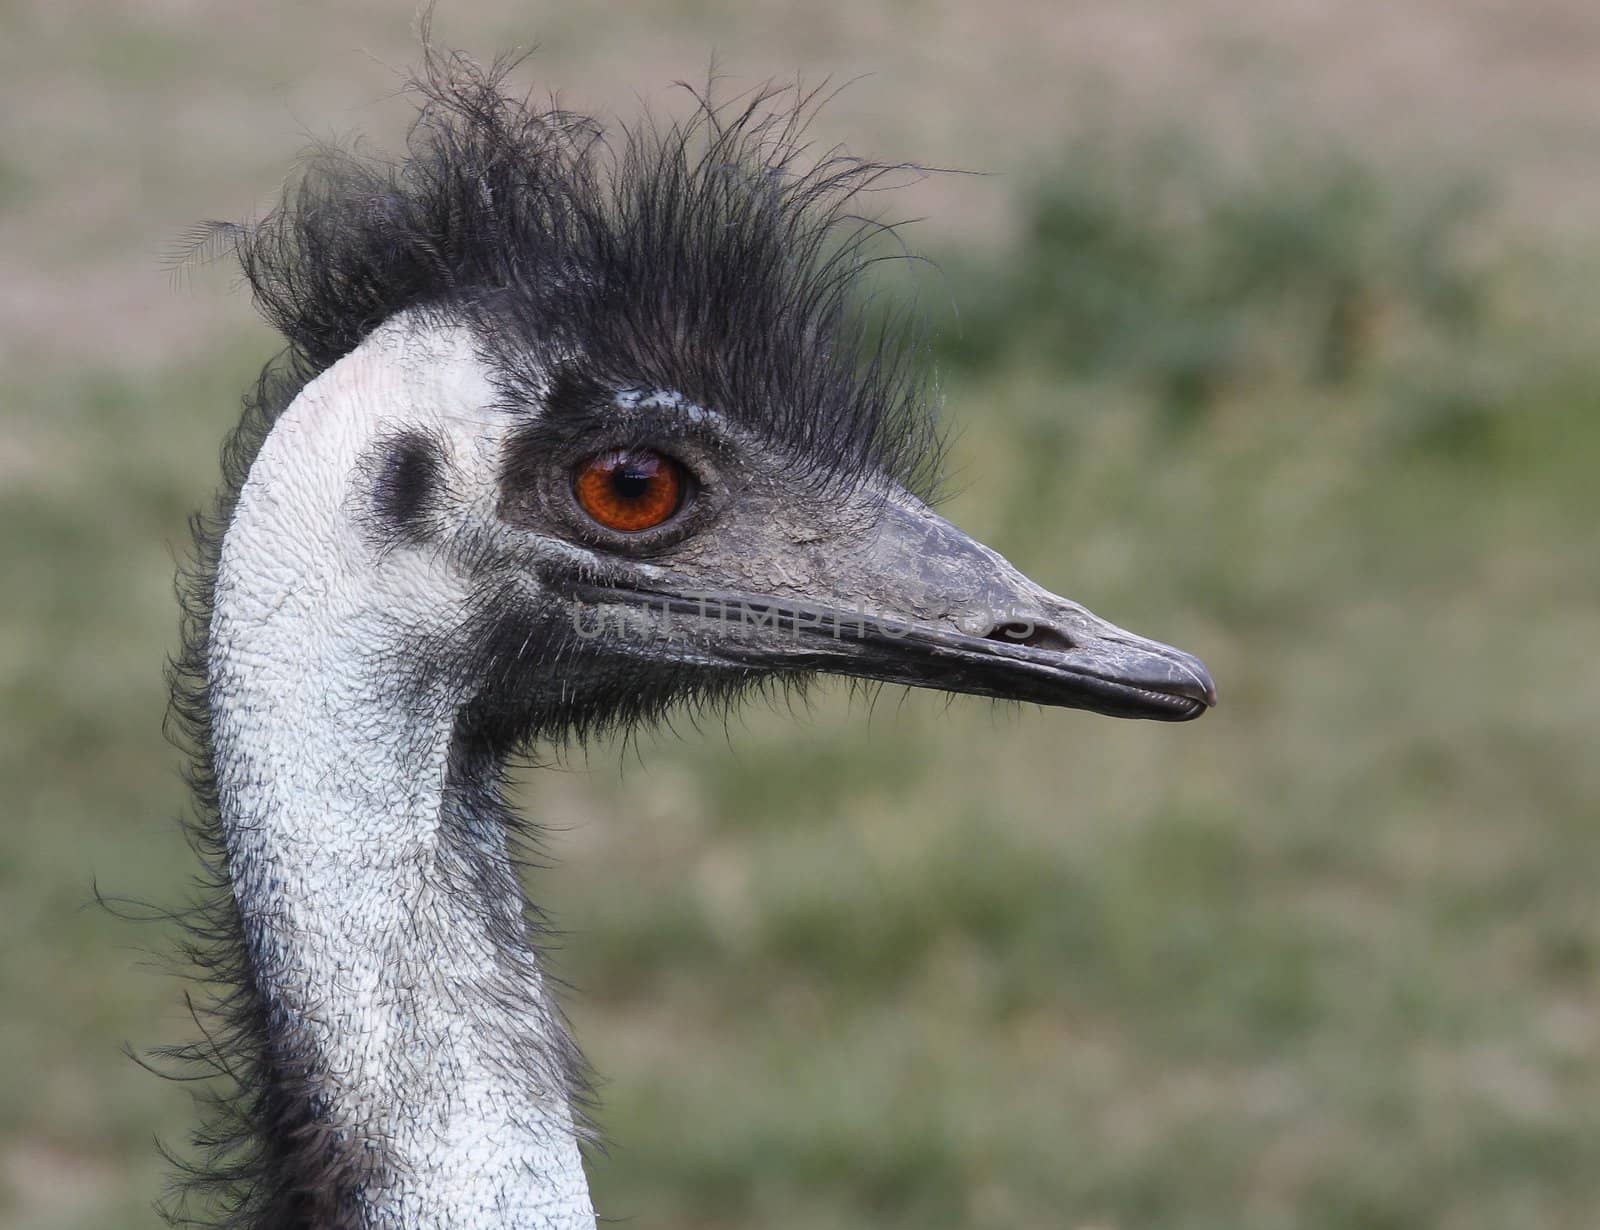 Nearby emu portrait profile red eyes.